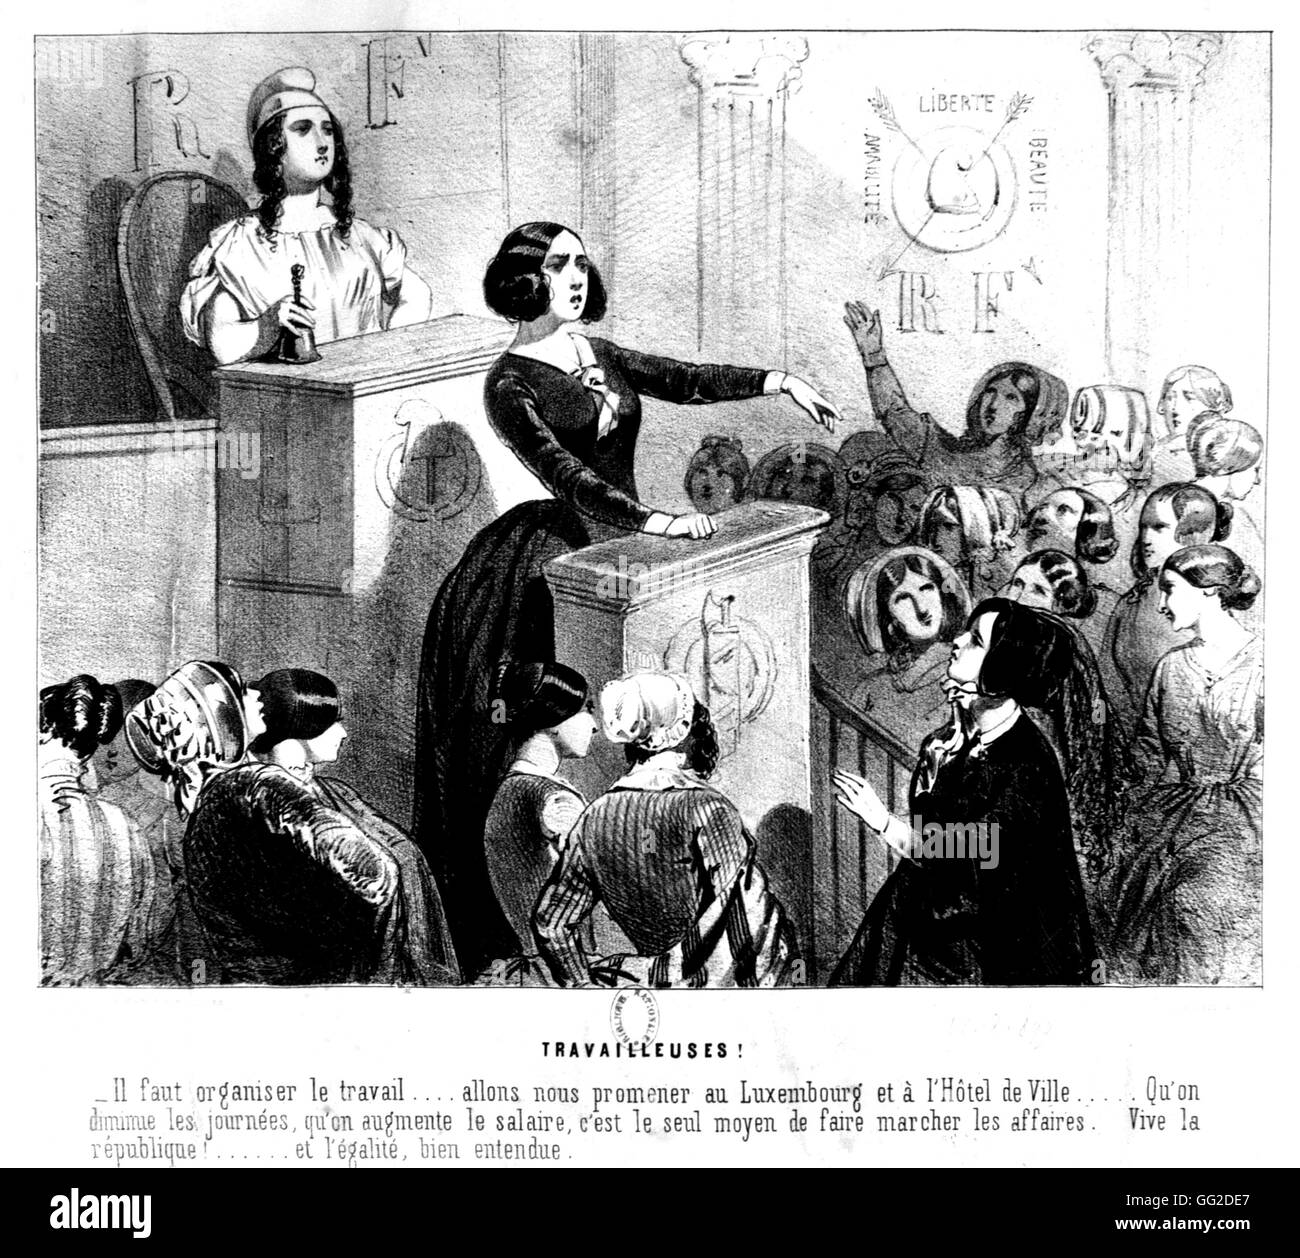 Women's club ("Club des Puces') 1848 Francia Parigi. Biblioteca nazionale Foto Stock